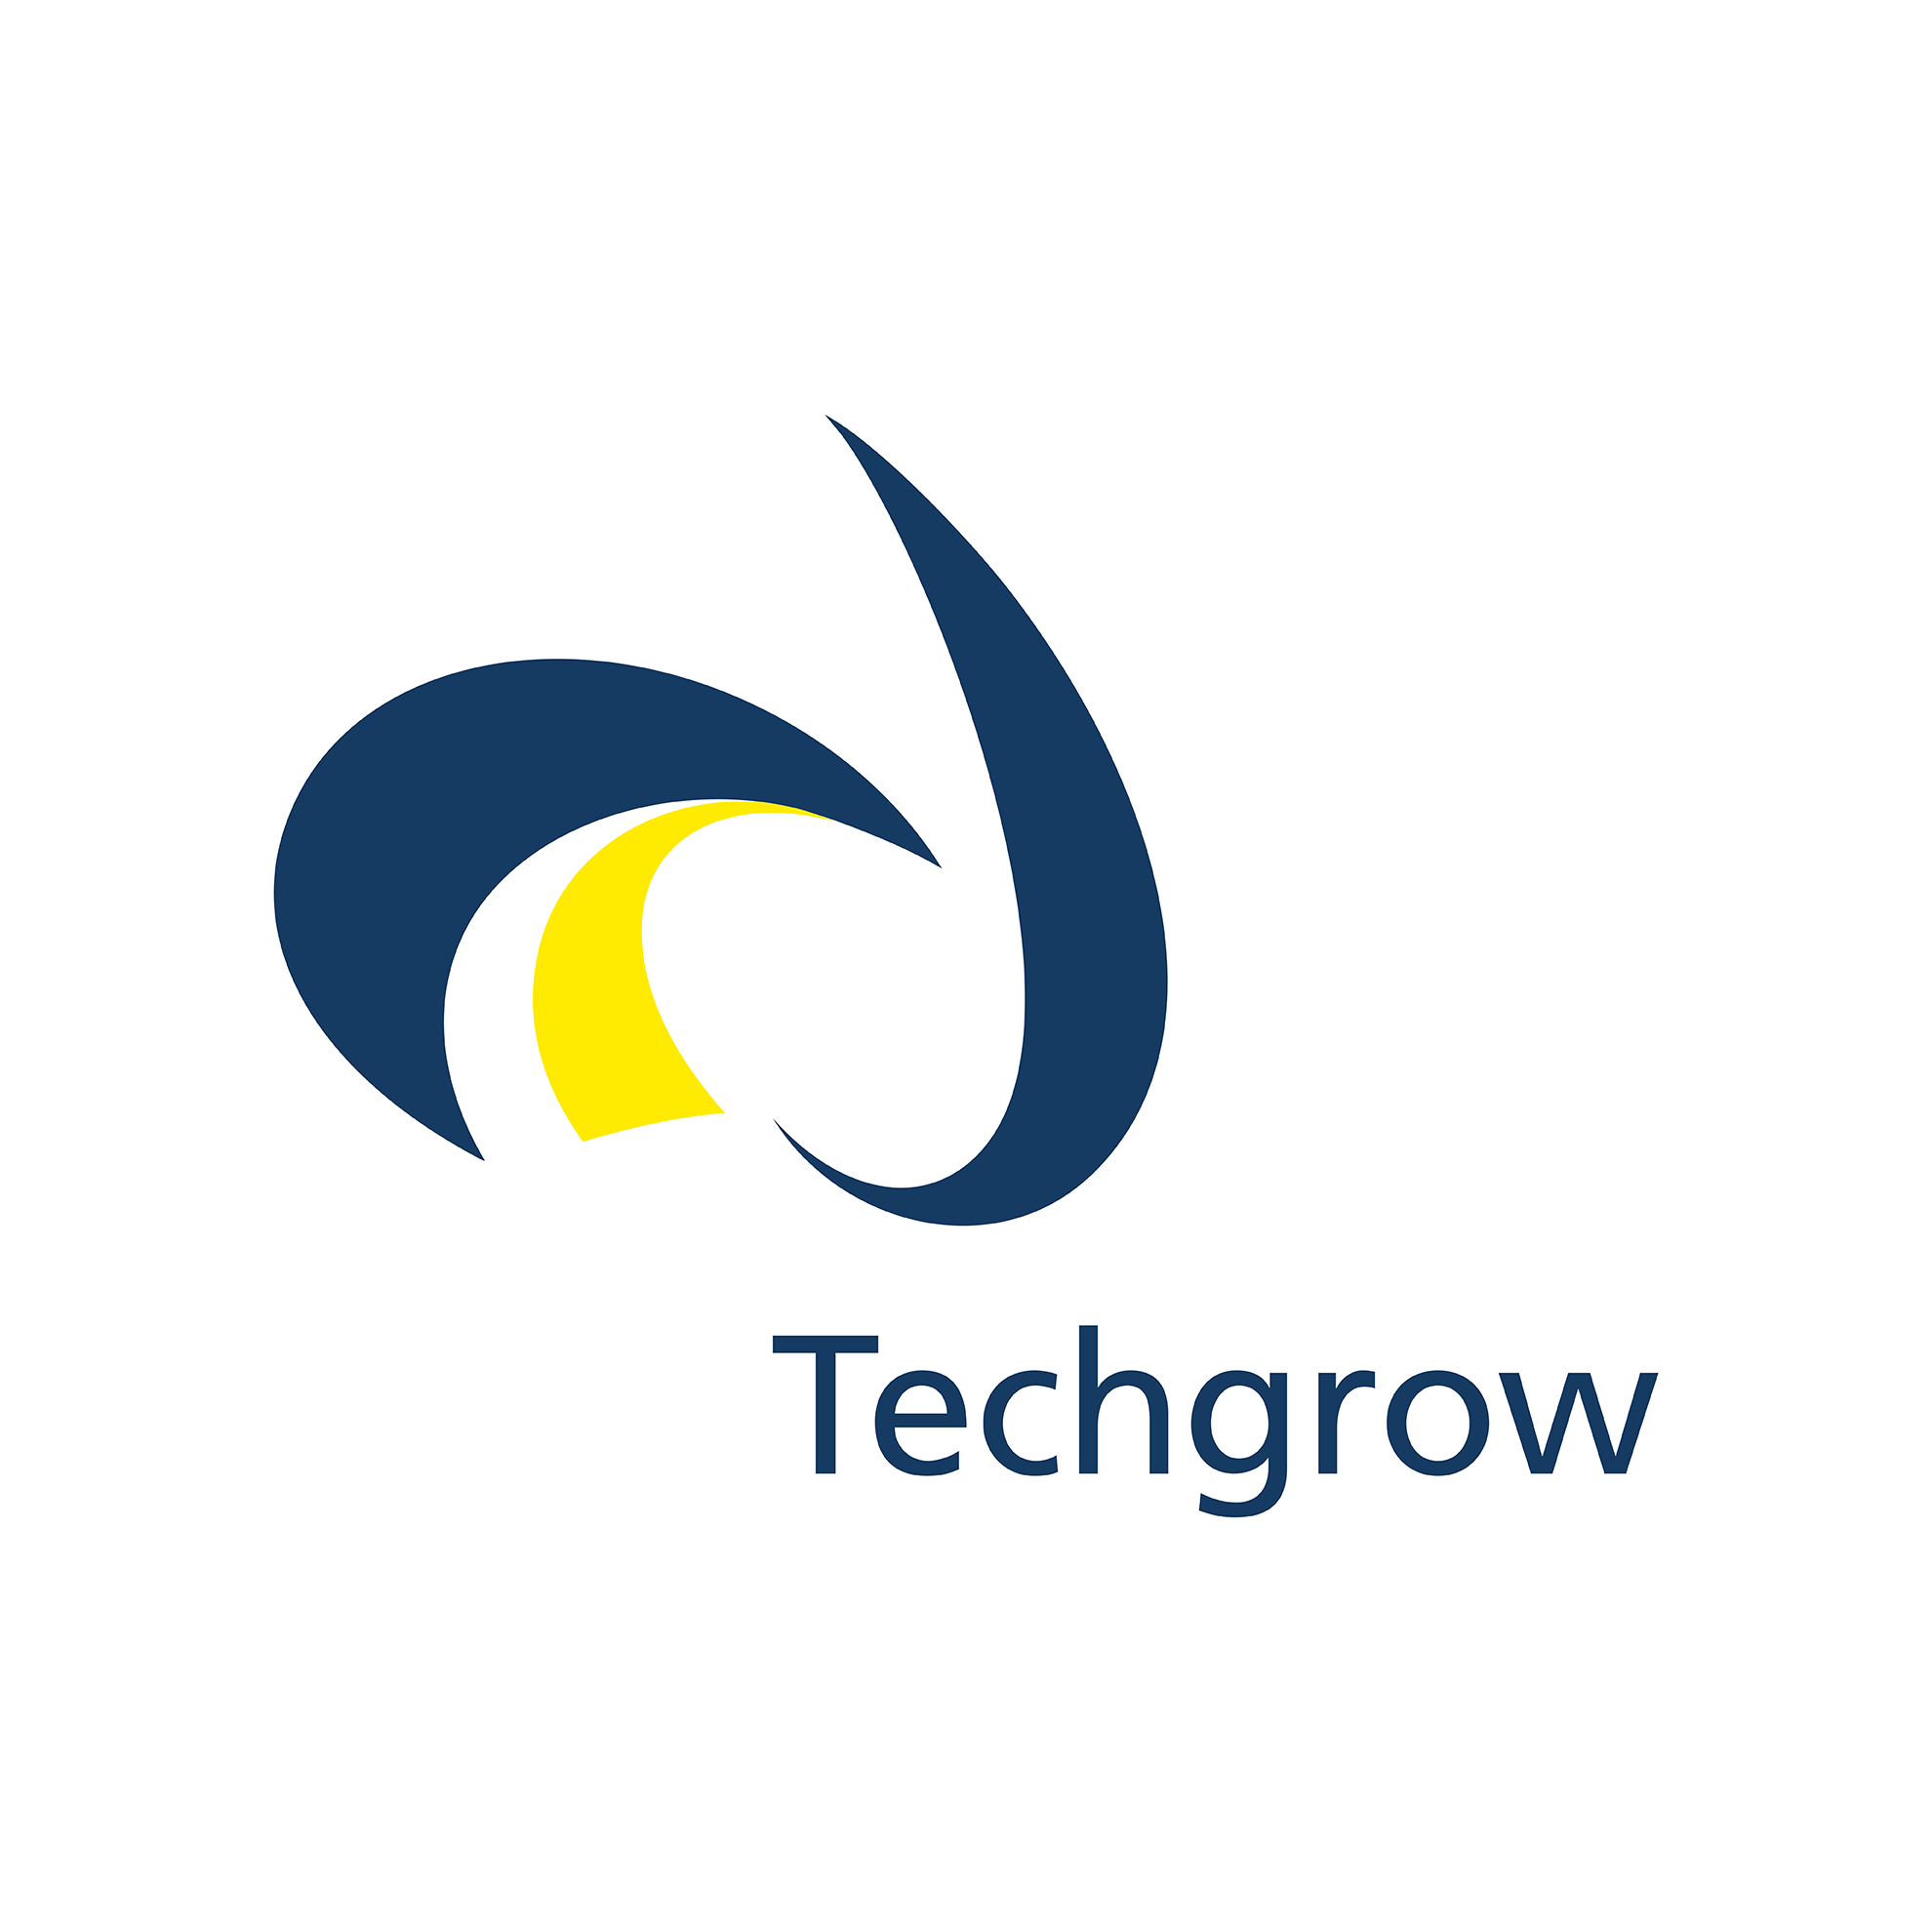 Techgrow logo